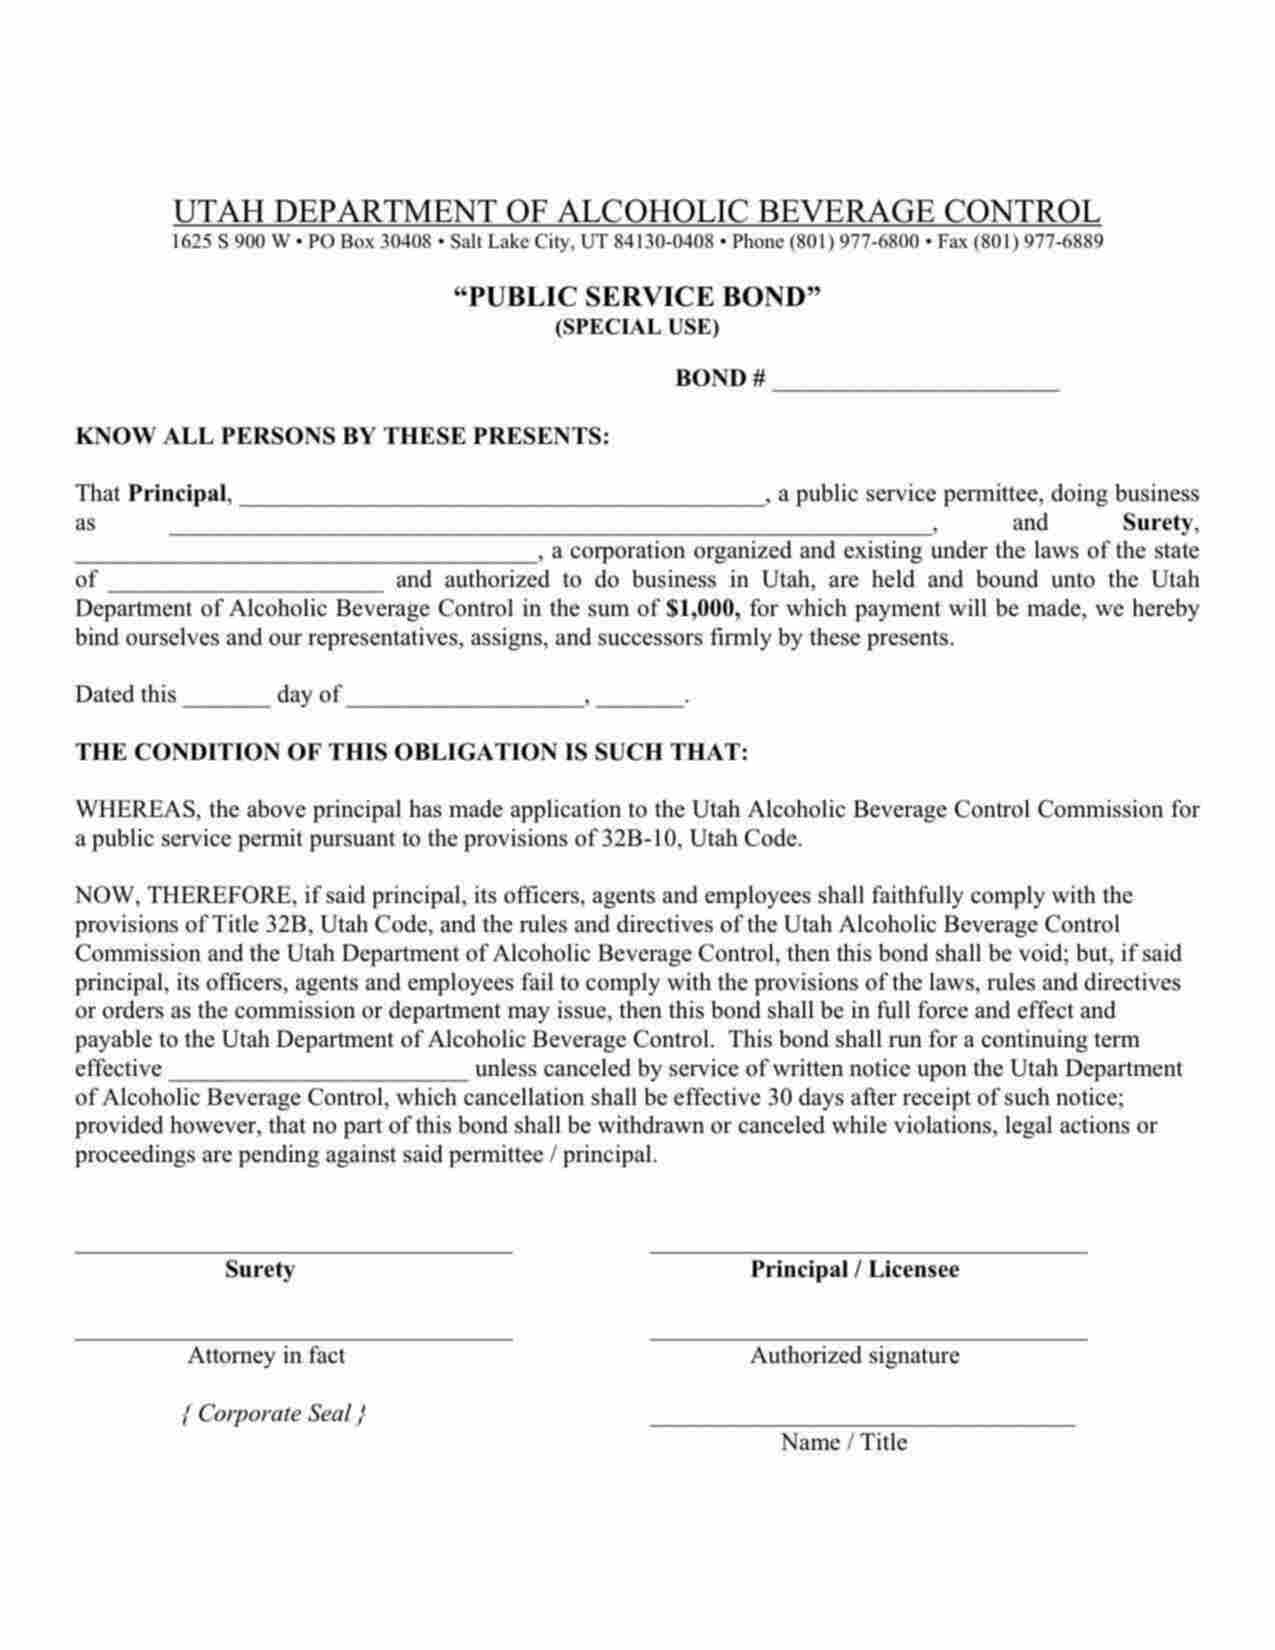 Utah Public Service Permit (Special Use) Bond Form